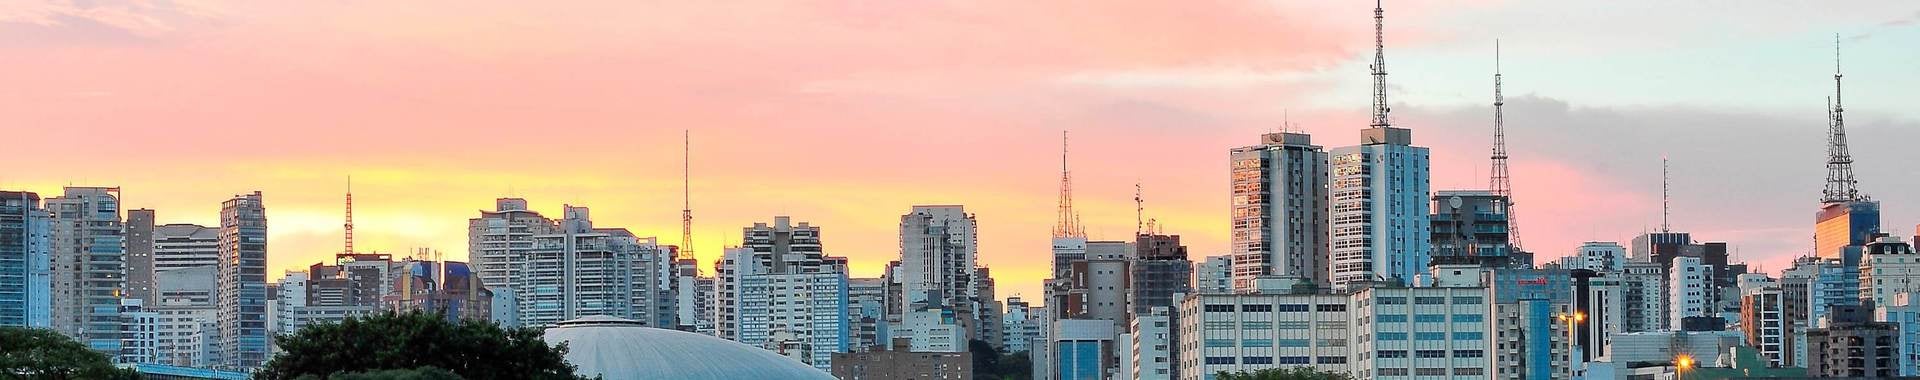 São Paulo skyline seen from Ibirapuera park